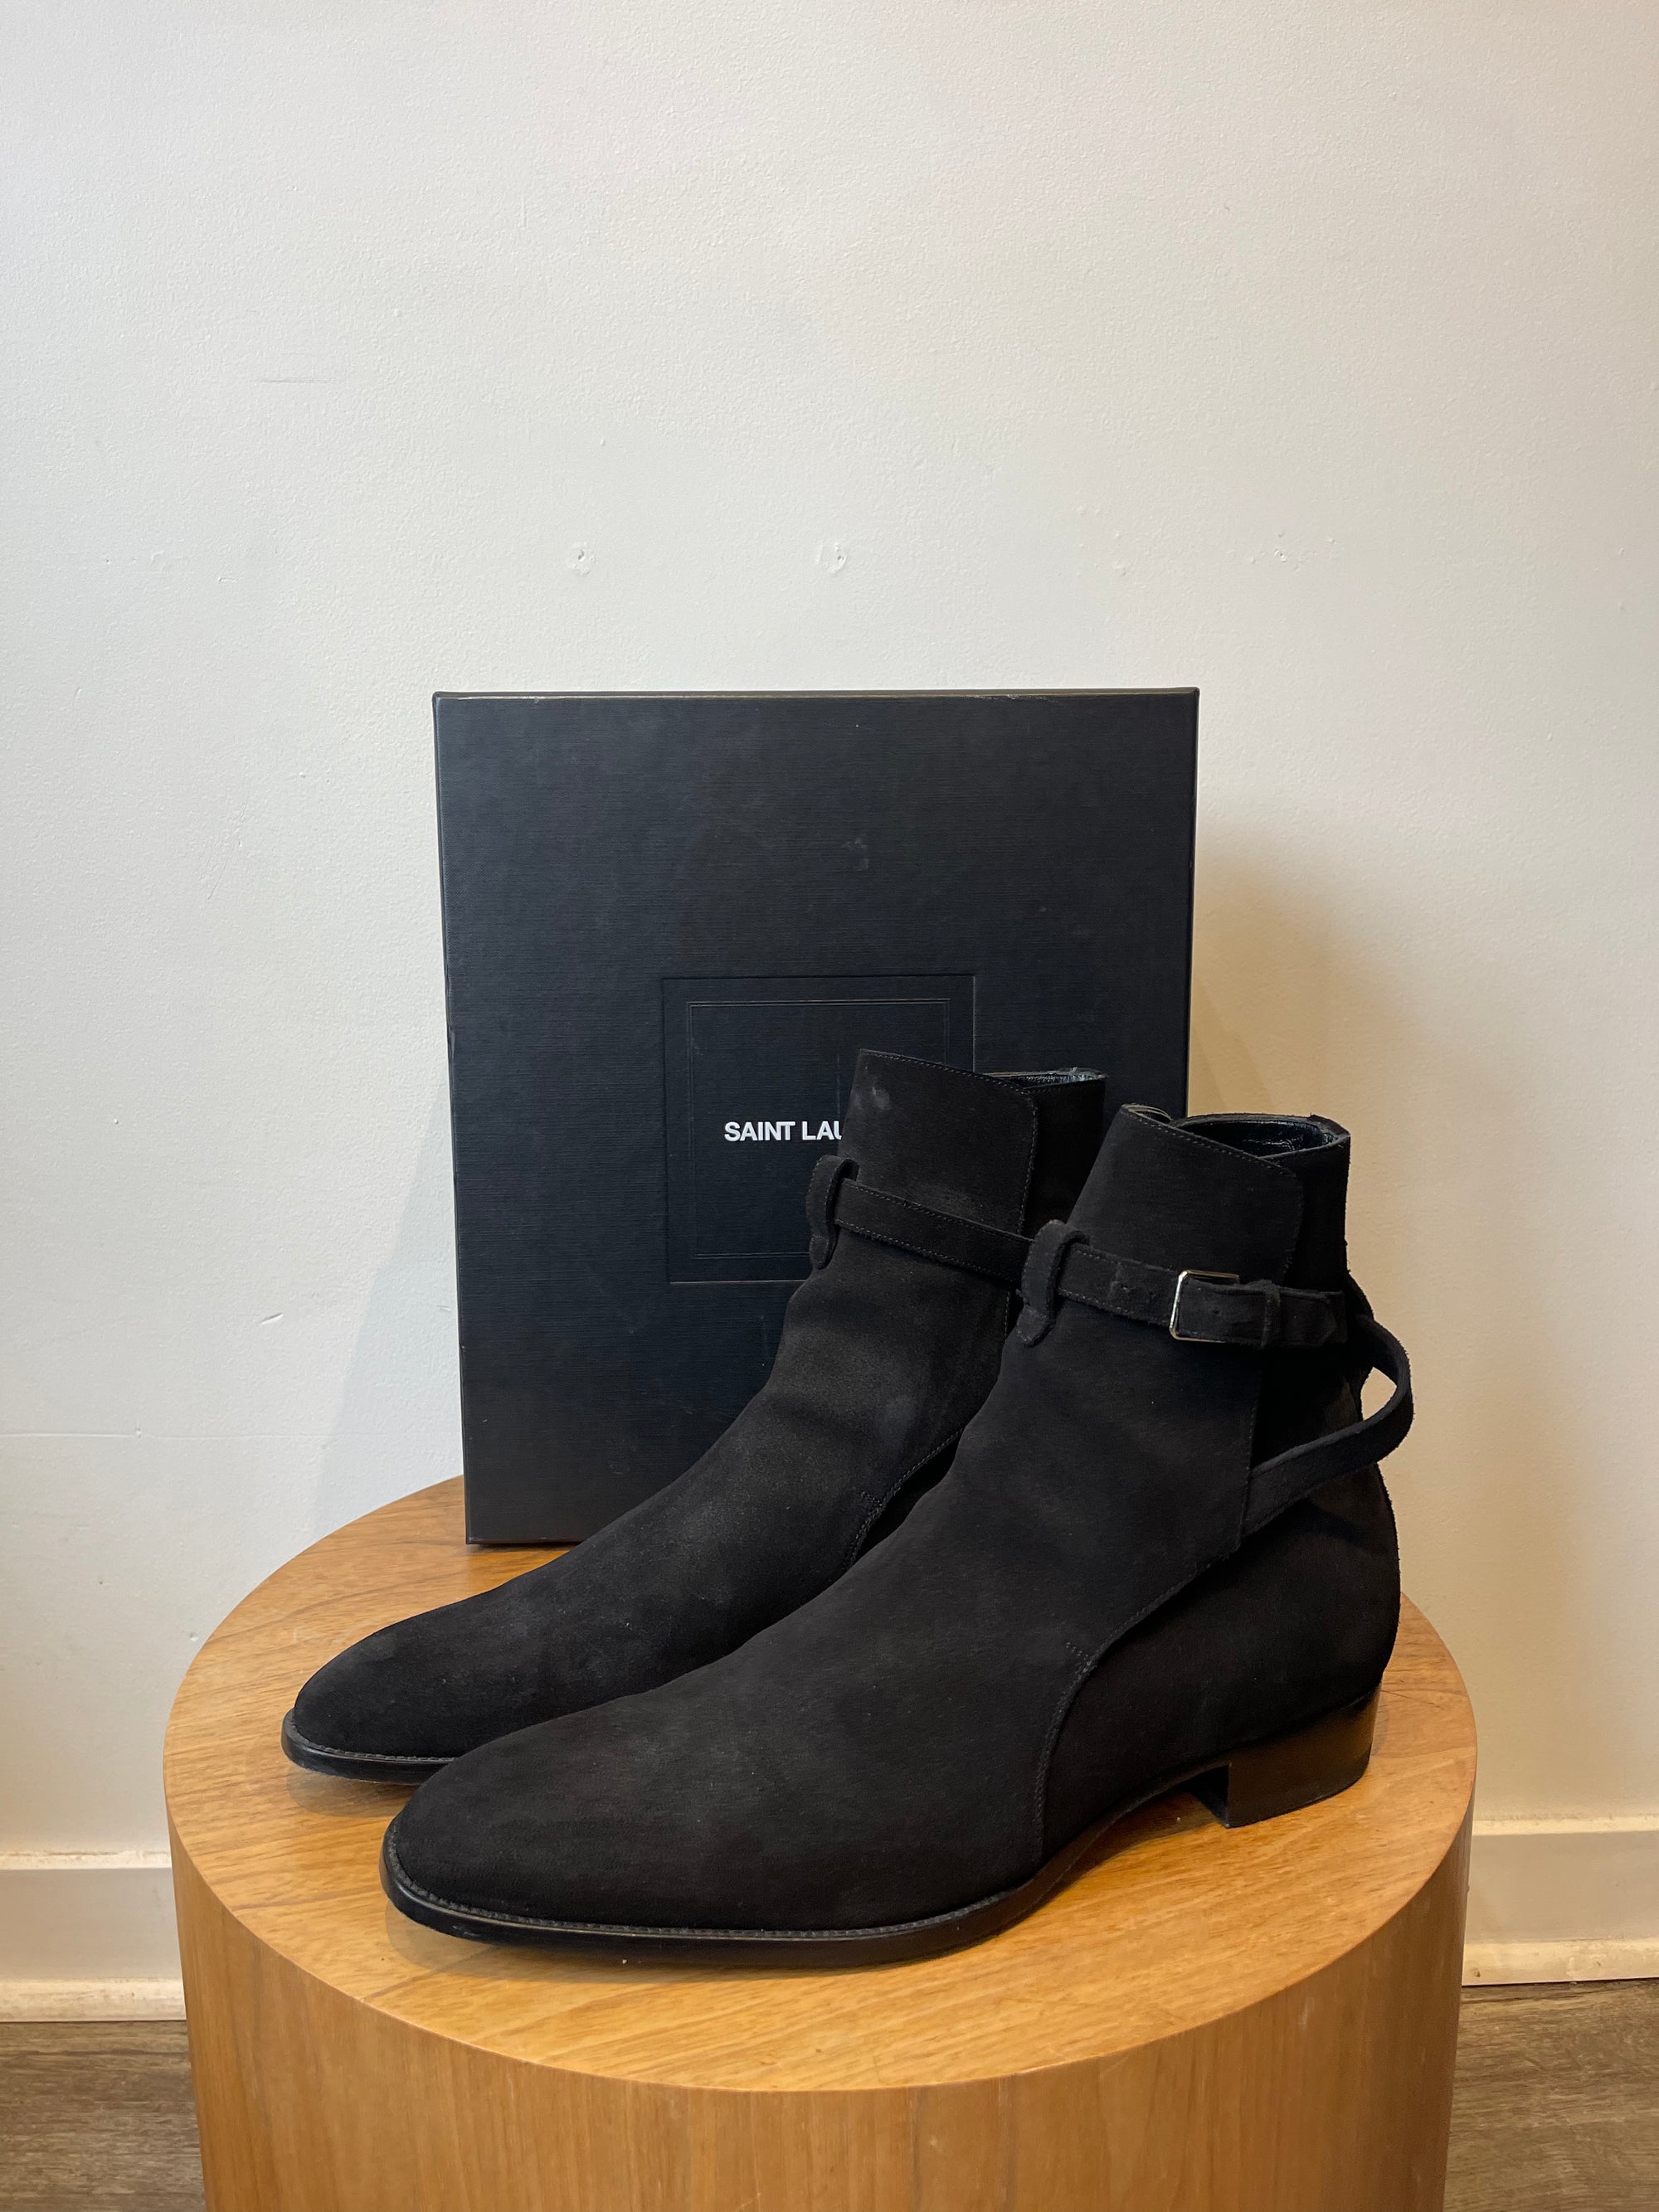 Yves Saint Laurent Black Suede Wyatt Jodhpur Boots, 47